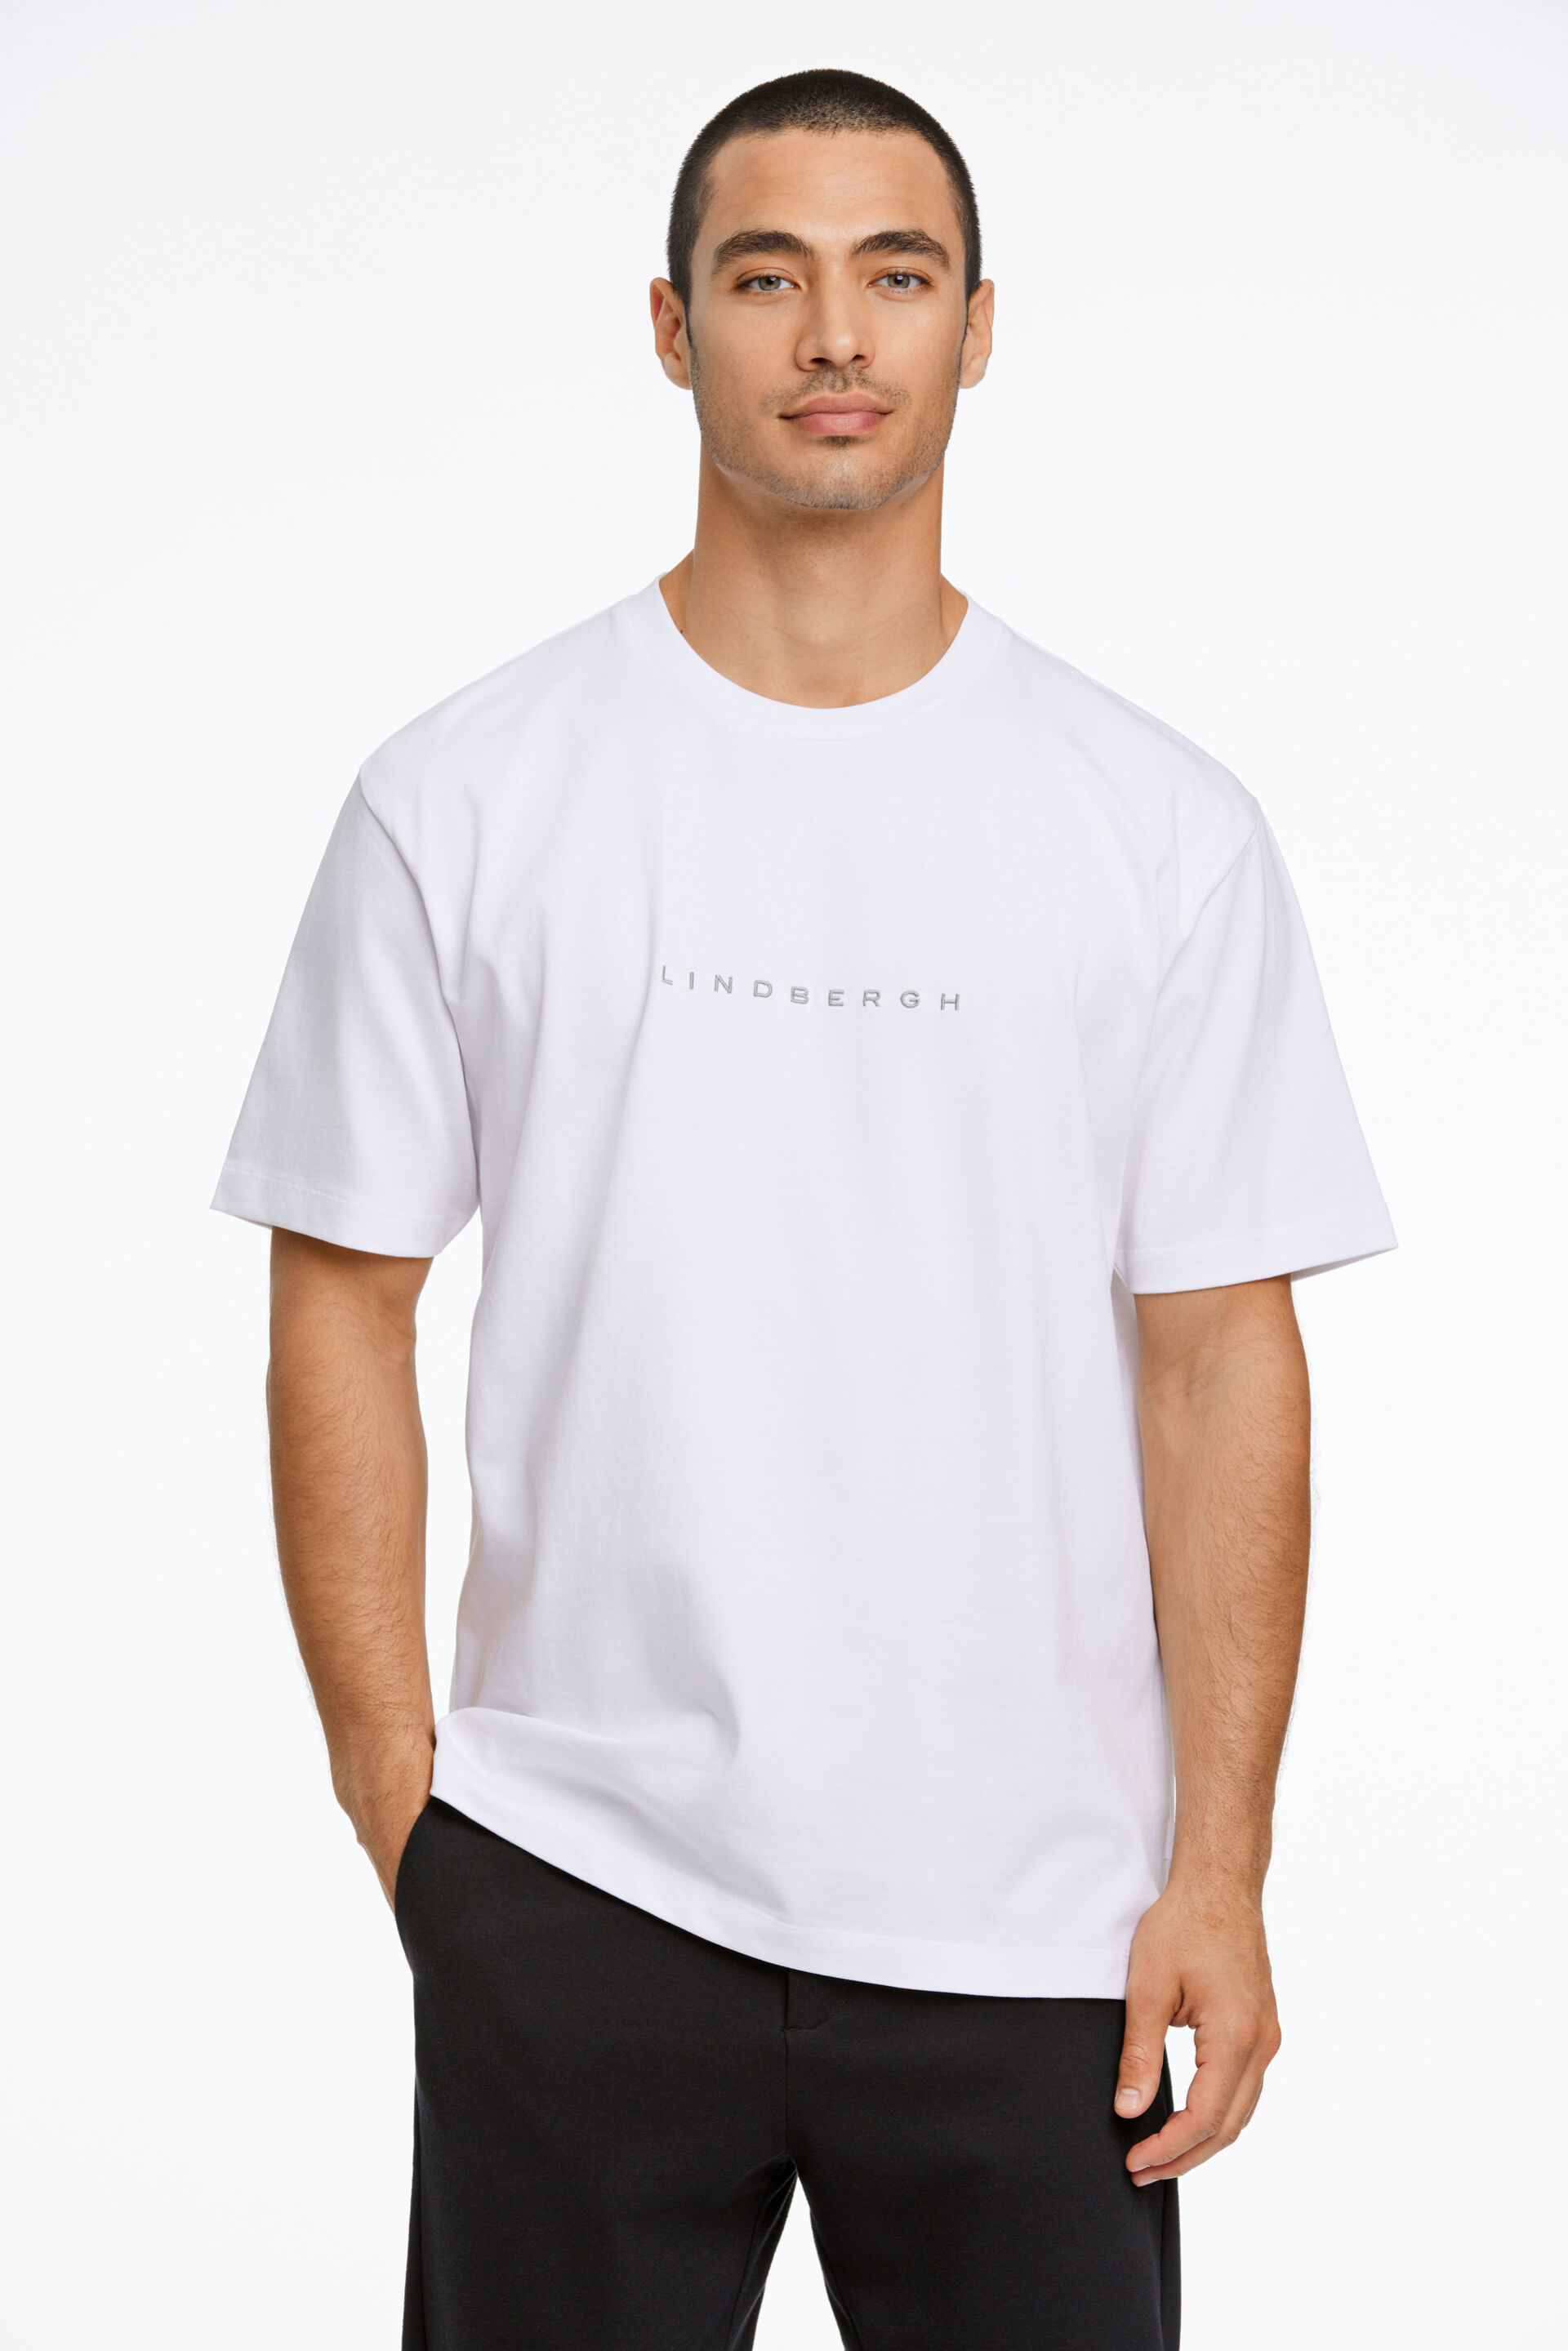 Lindbergh  T-shirt Hvid 30-400120B